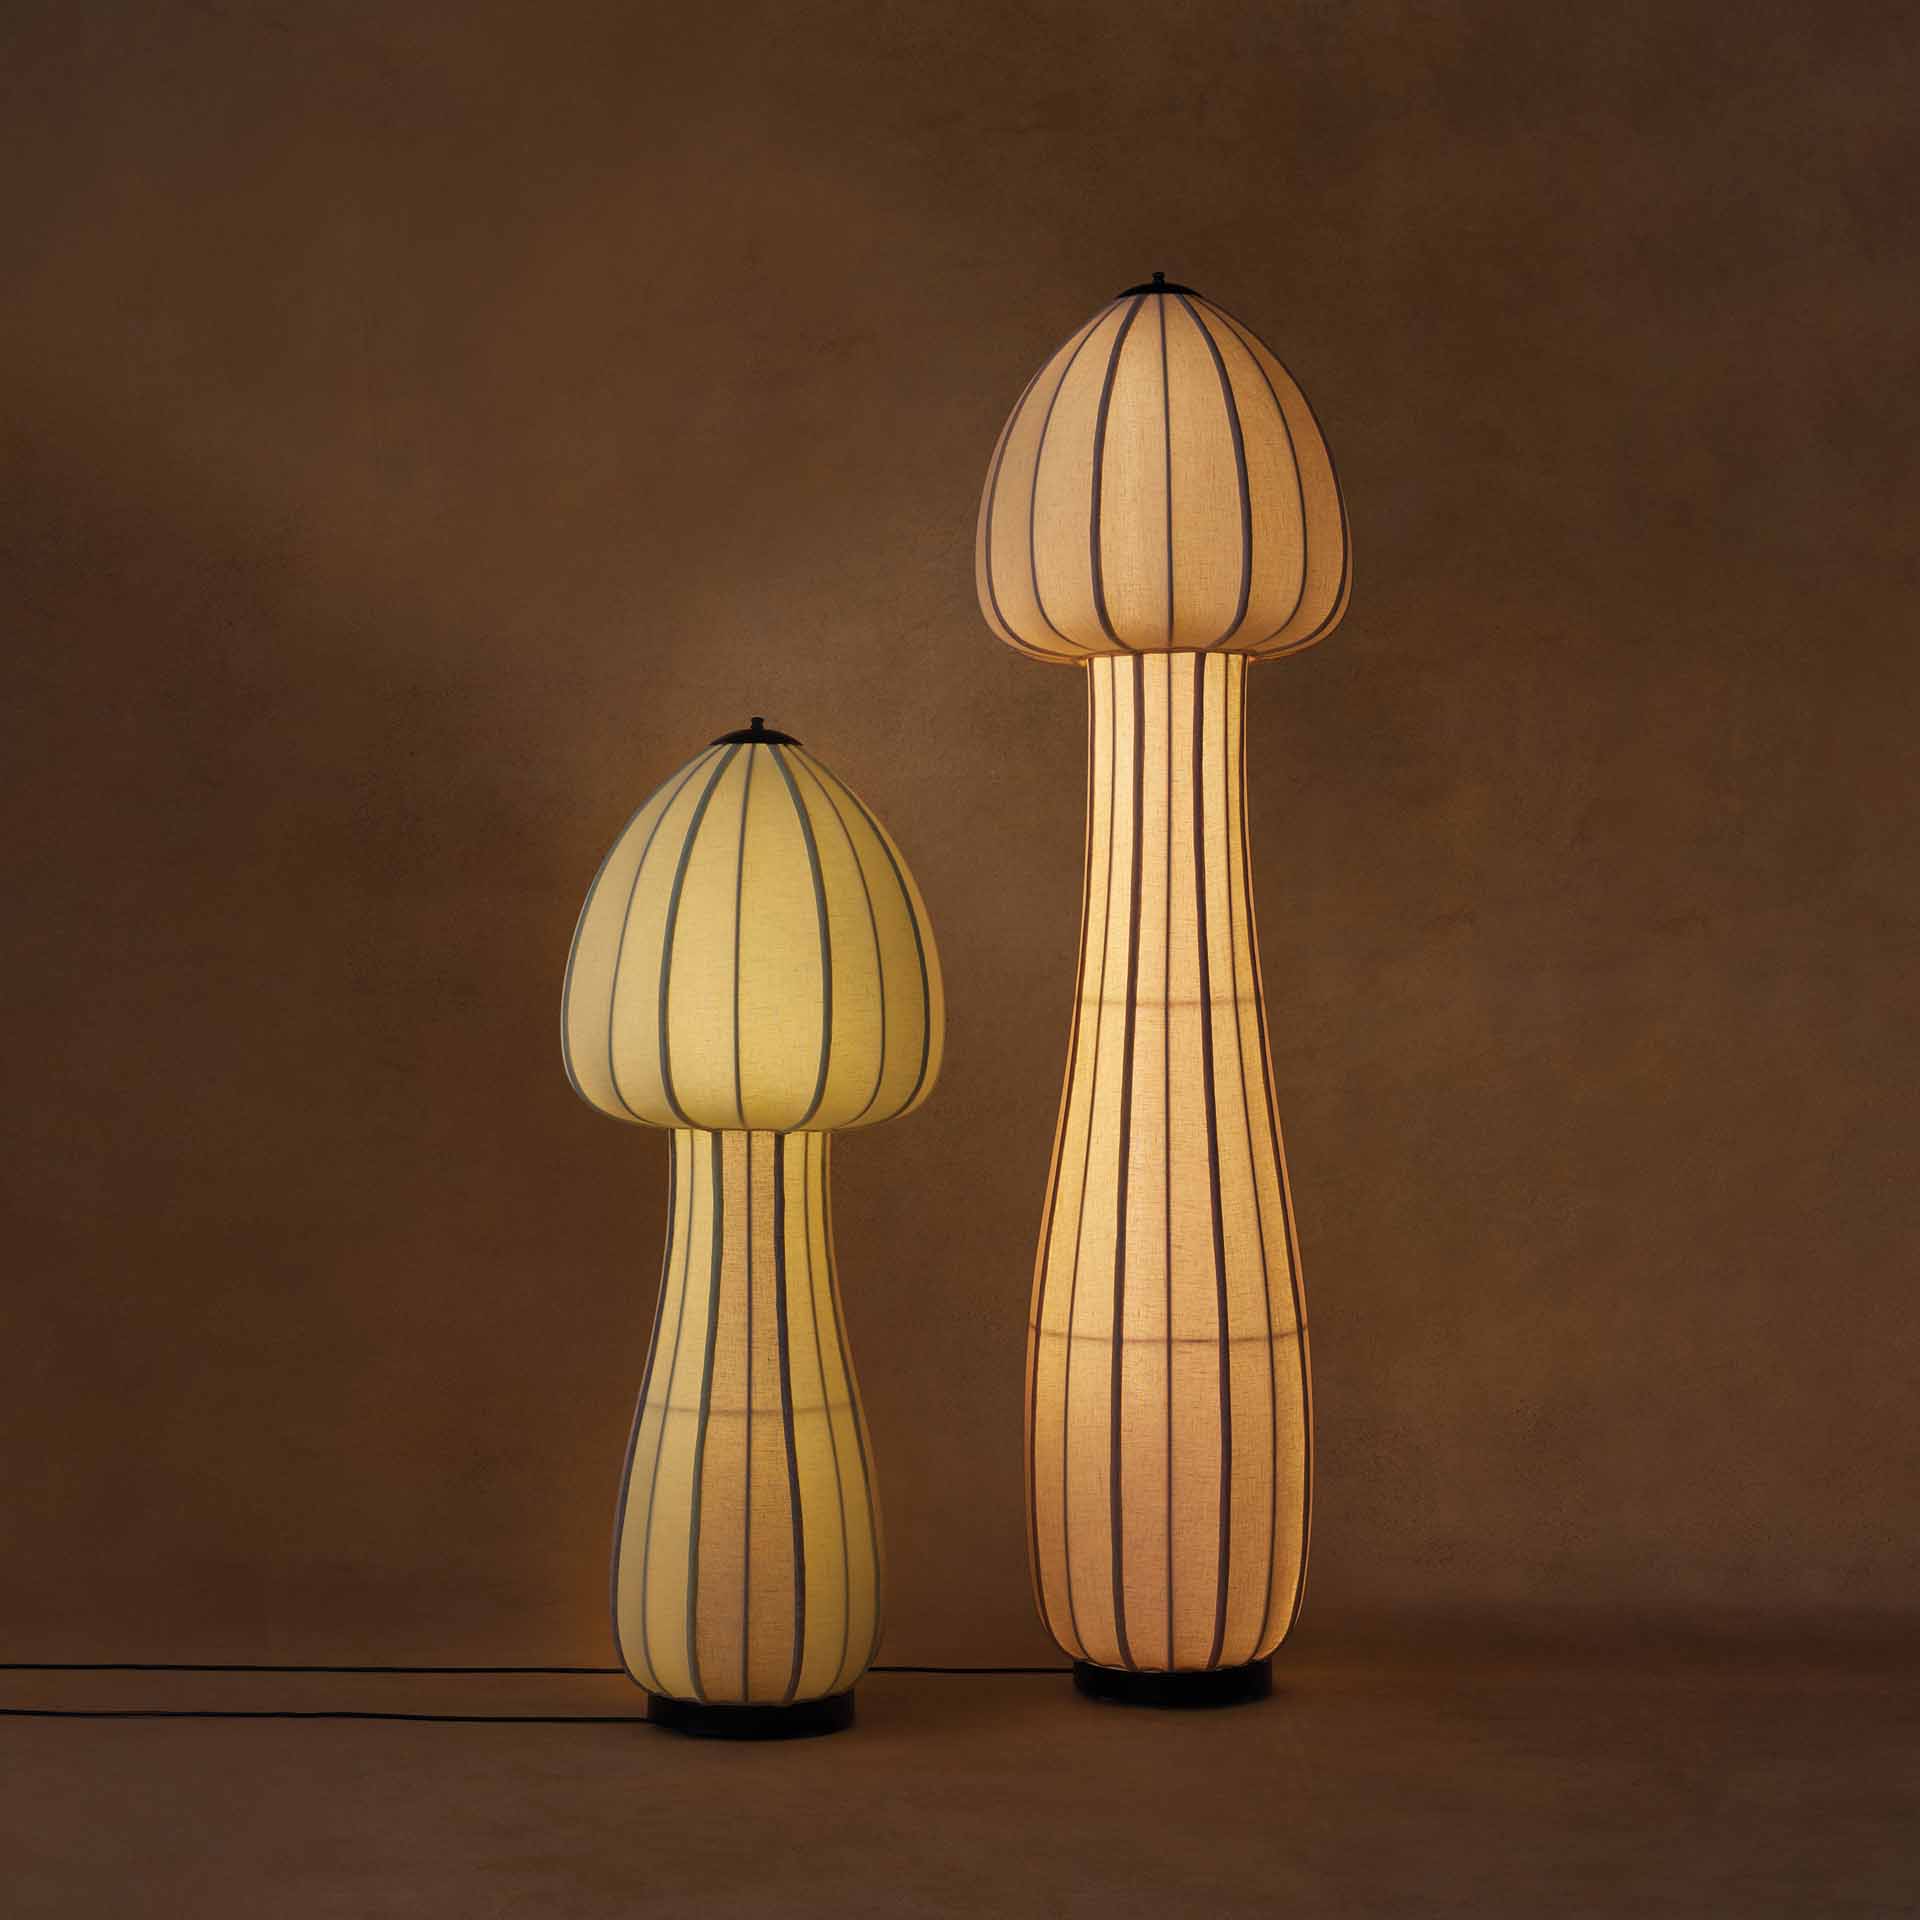 Mushroom Floor Lamps by Priyam Doshi